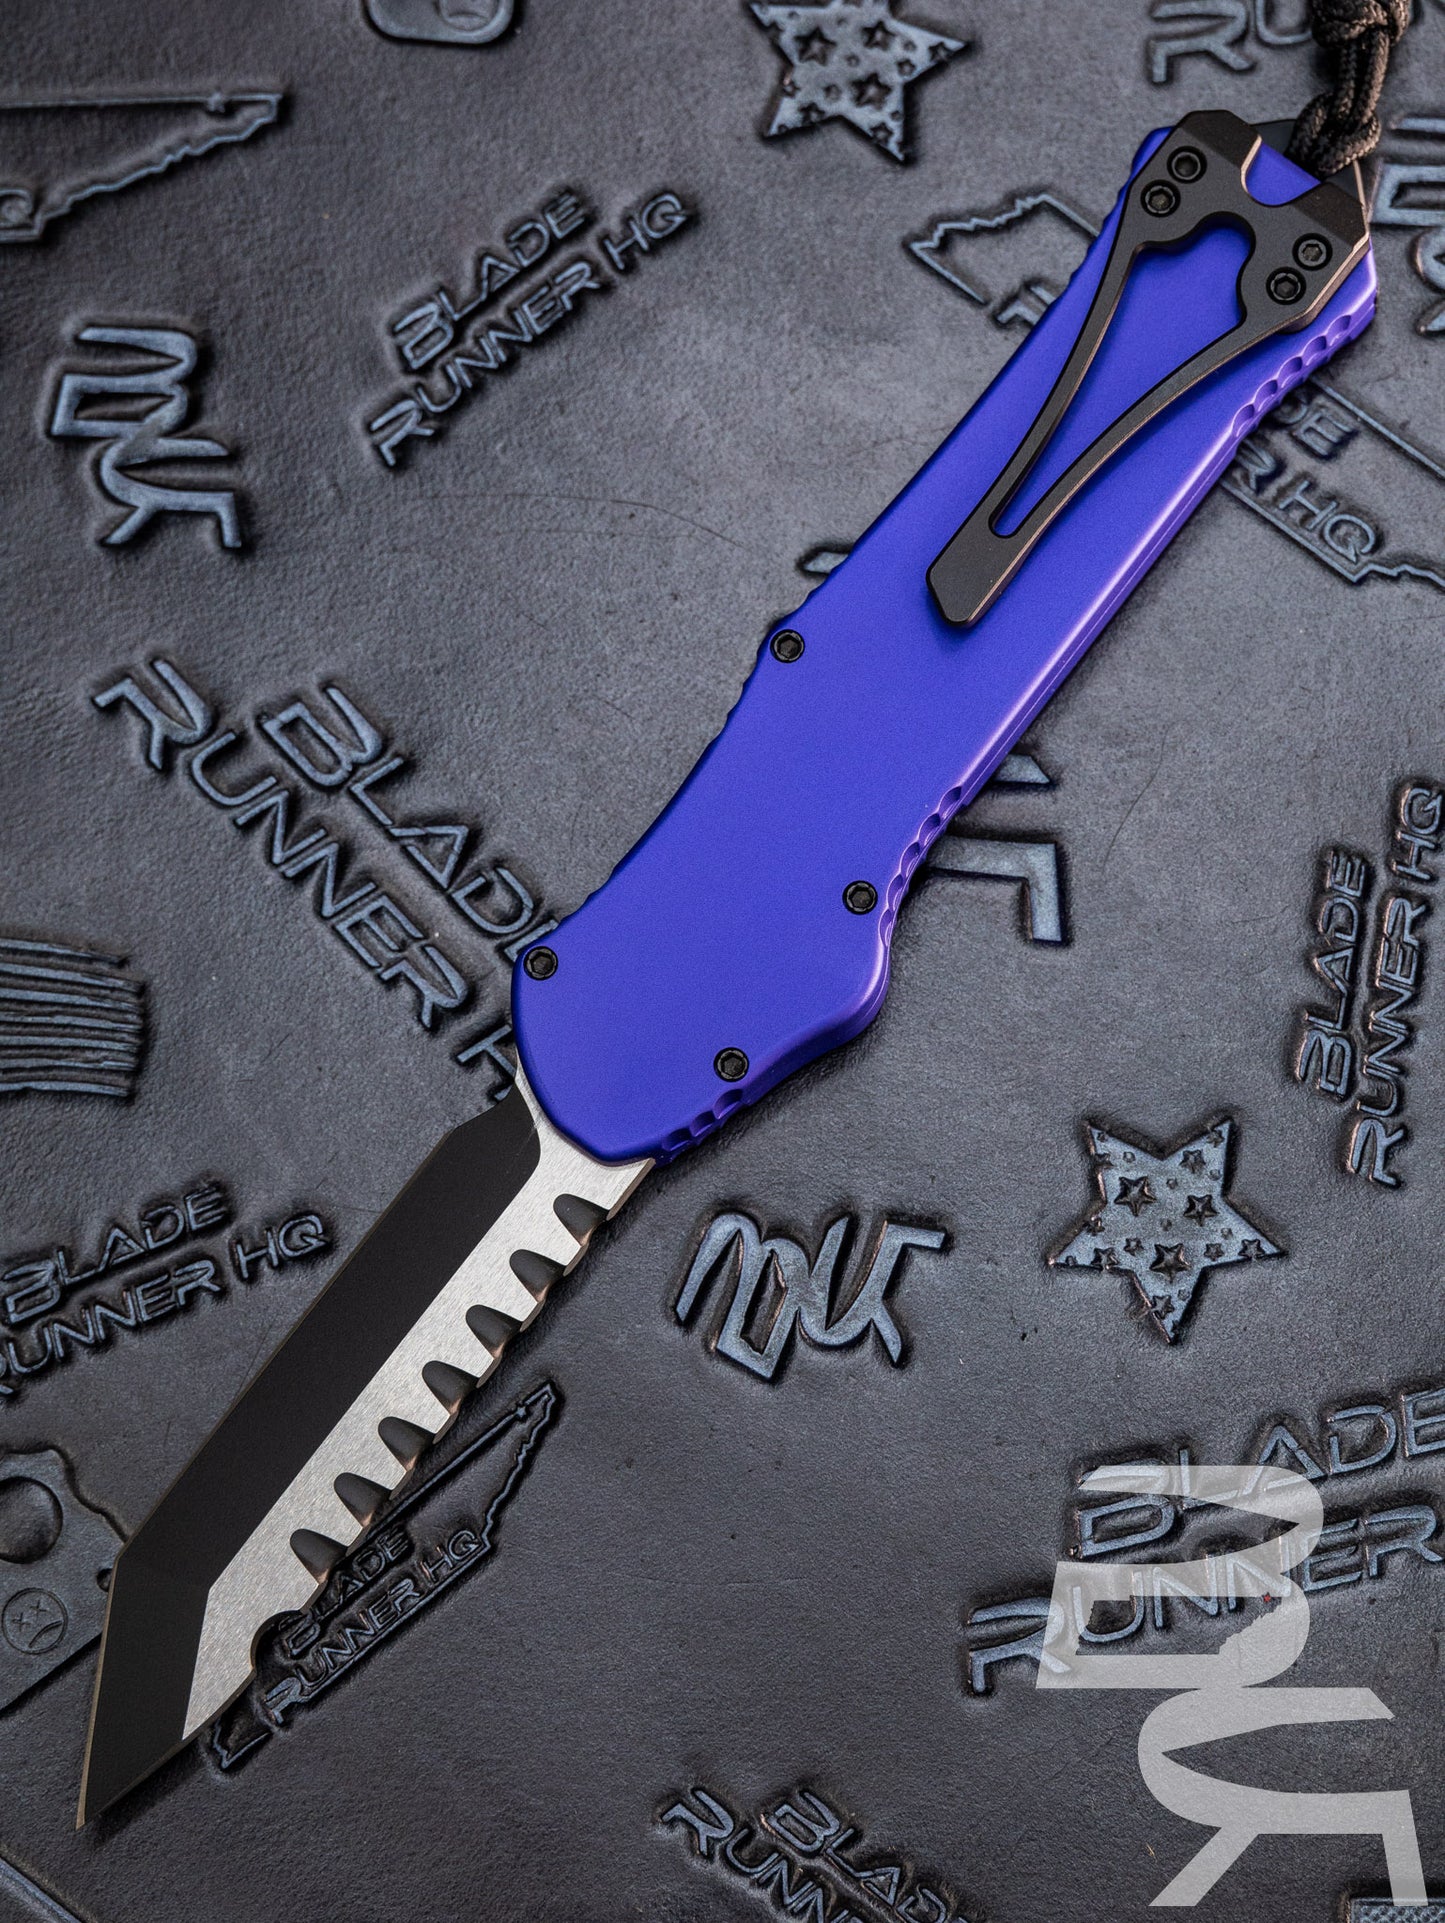 HERETIC KNIVES HYDRA PURPLE ALUMINUM OTF KNIFE 3.6" TANTO TWO-TONE BLACK H006-10A-PU